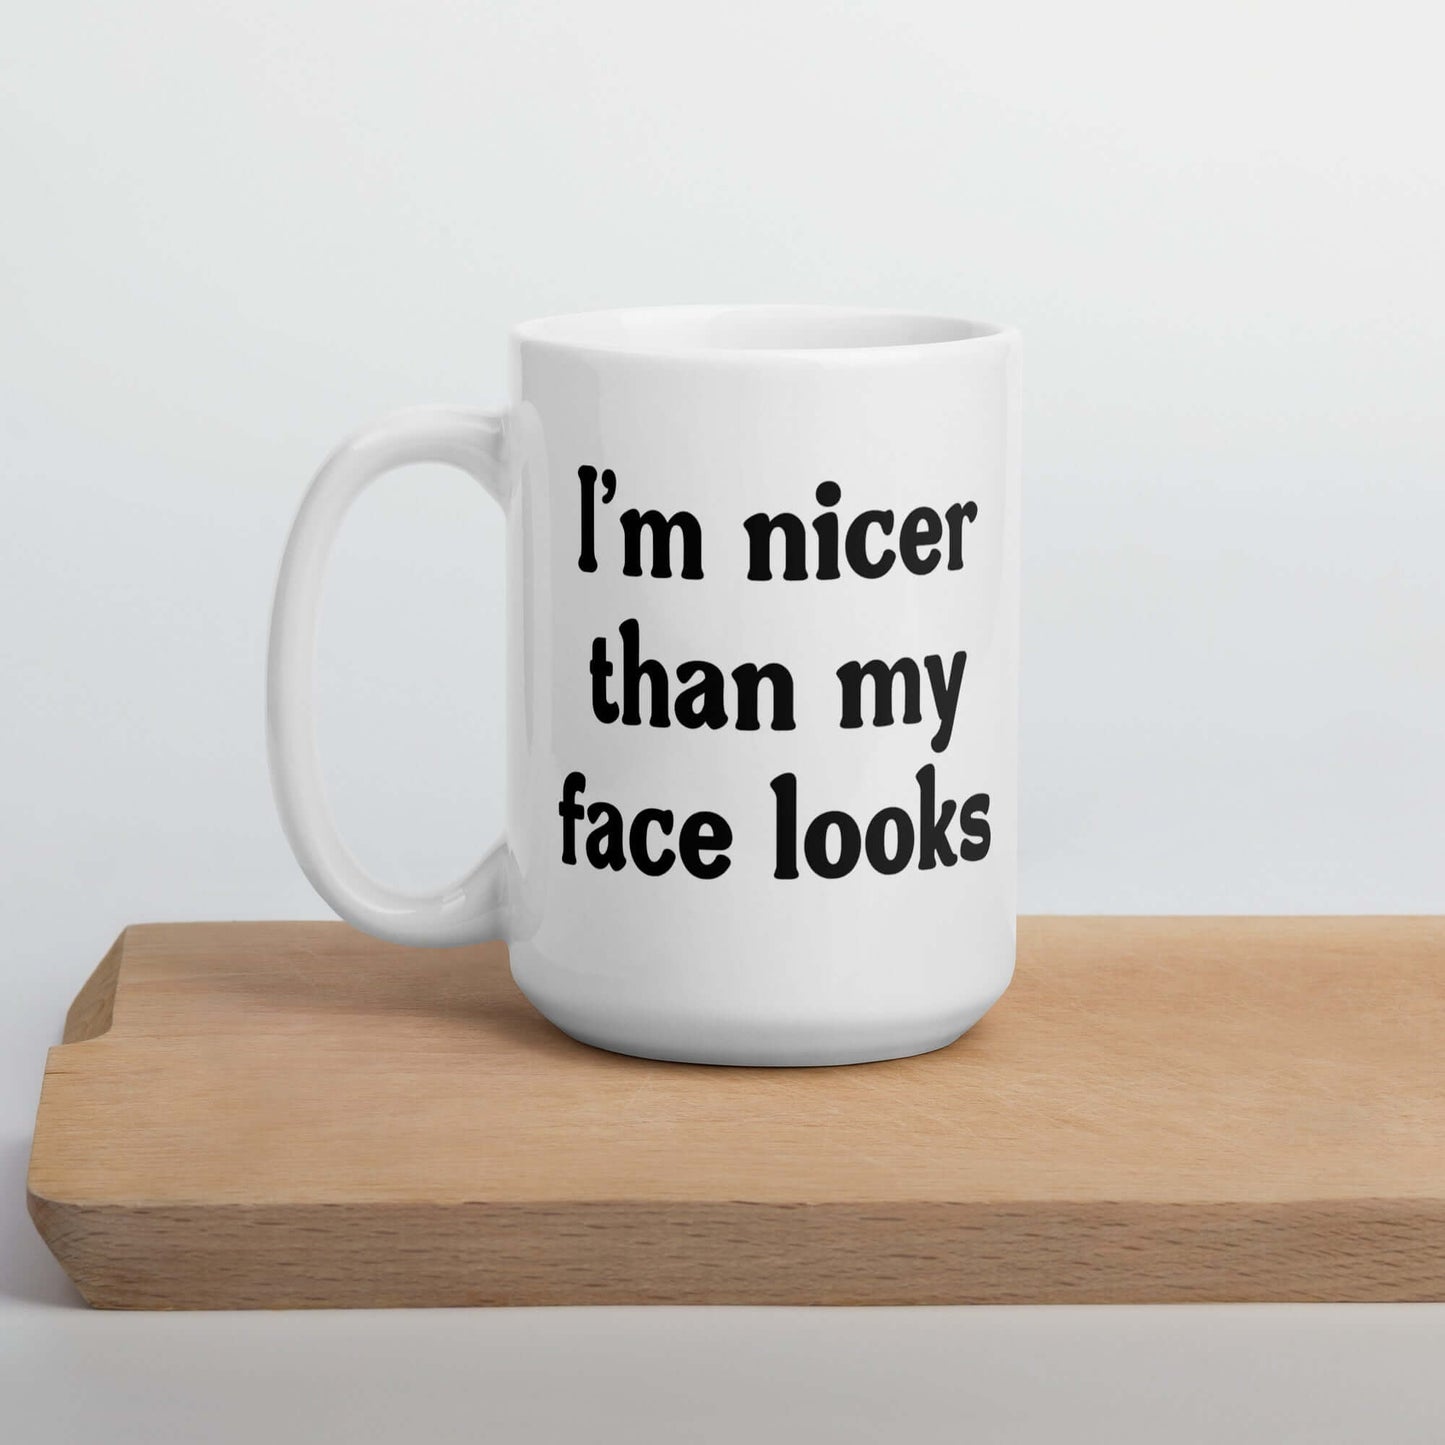 I'm nicer than my face looks ceramic coffee mug